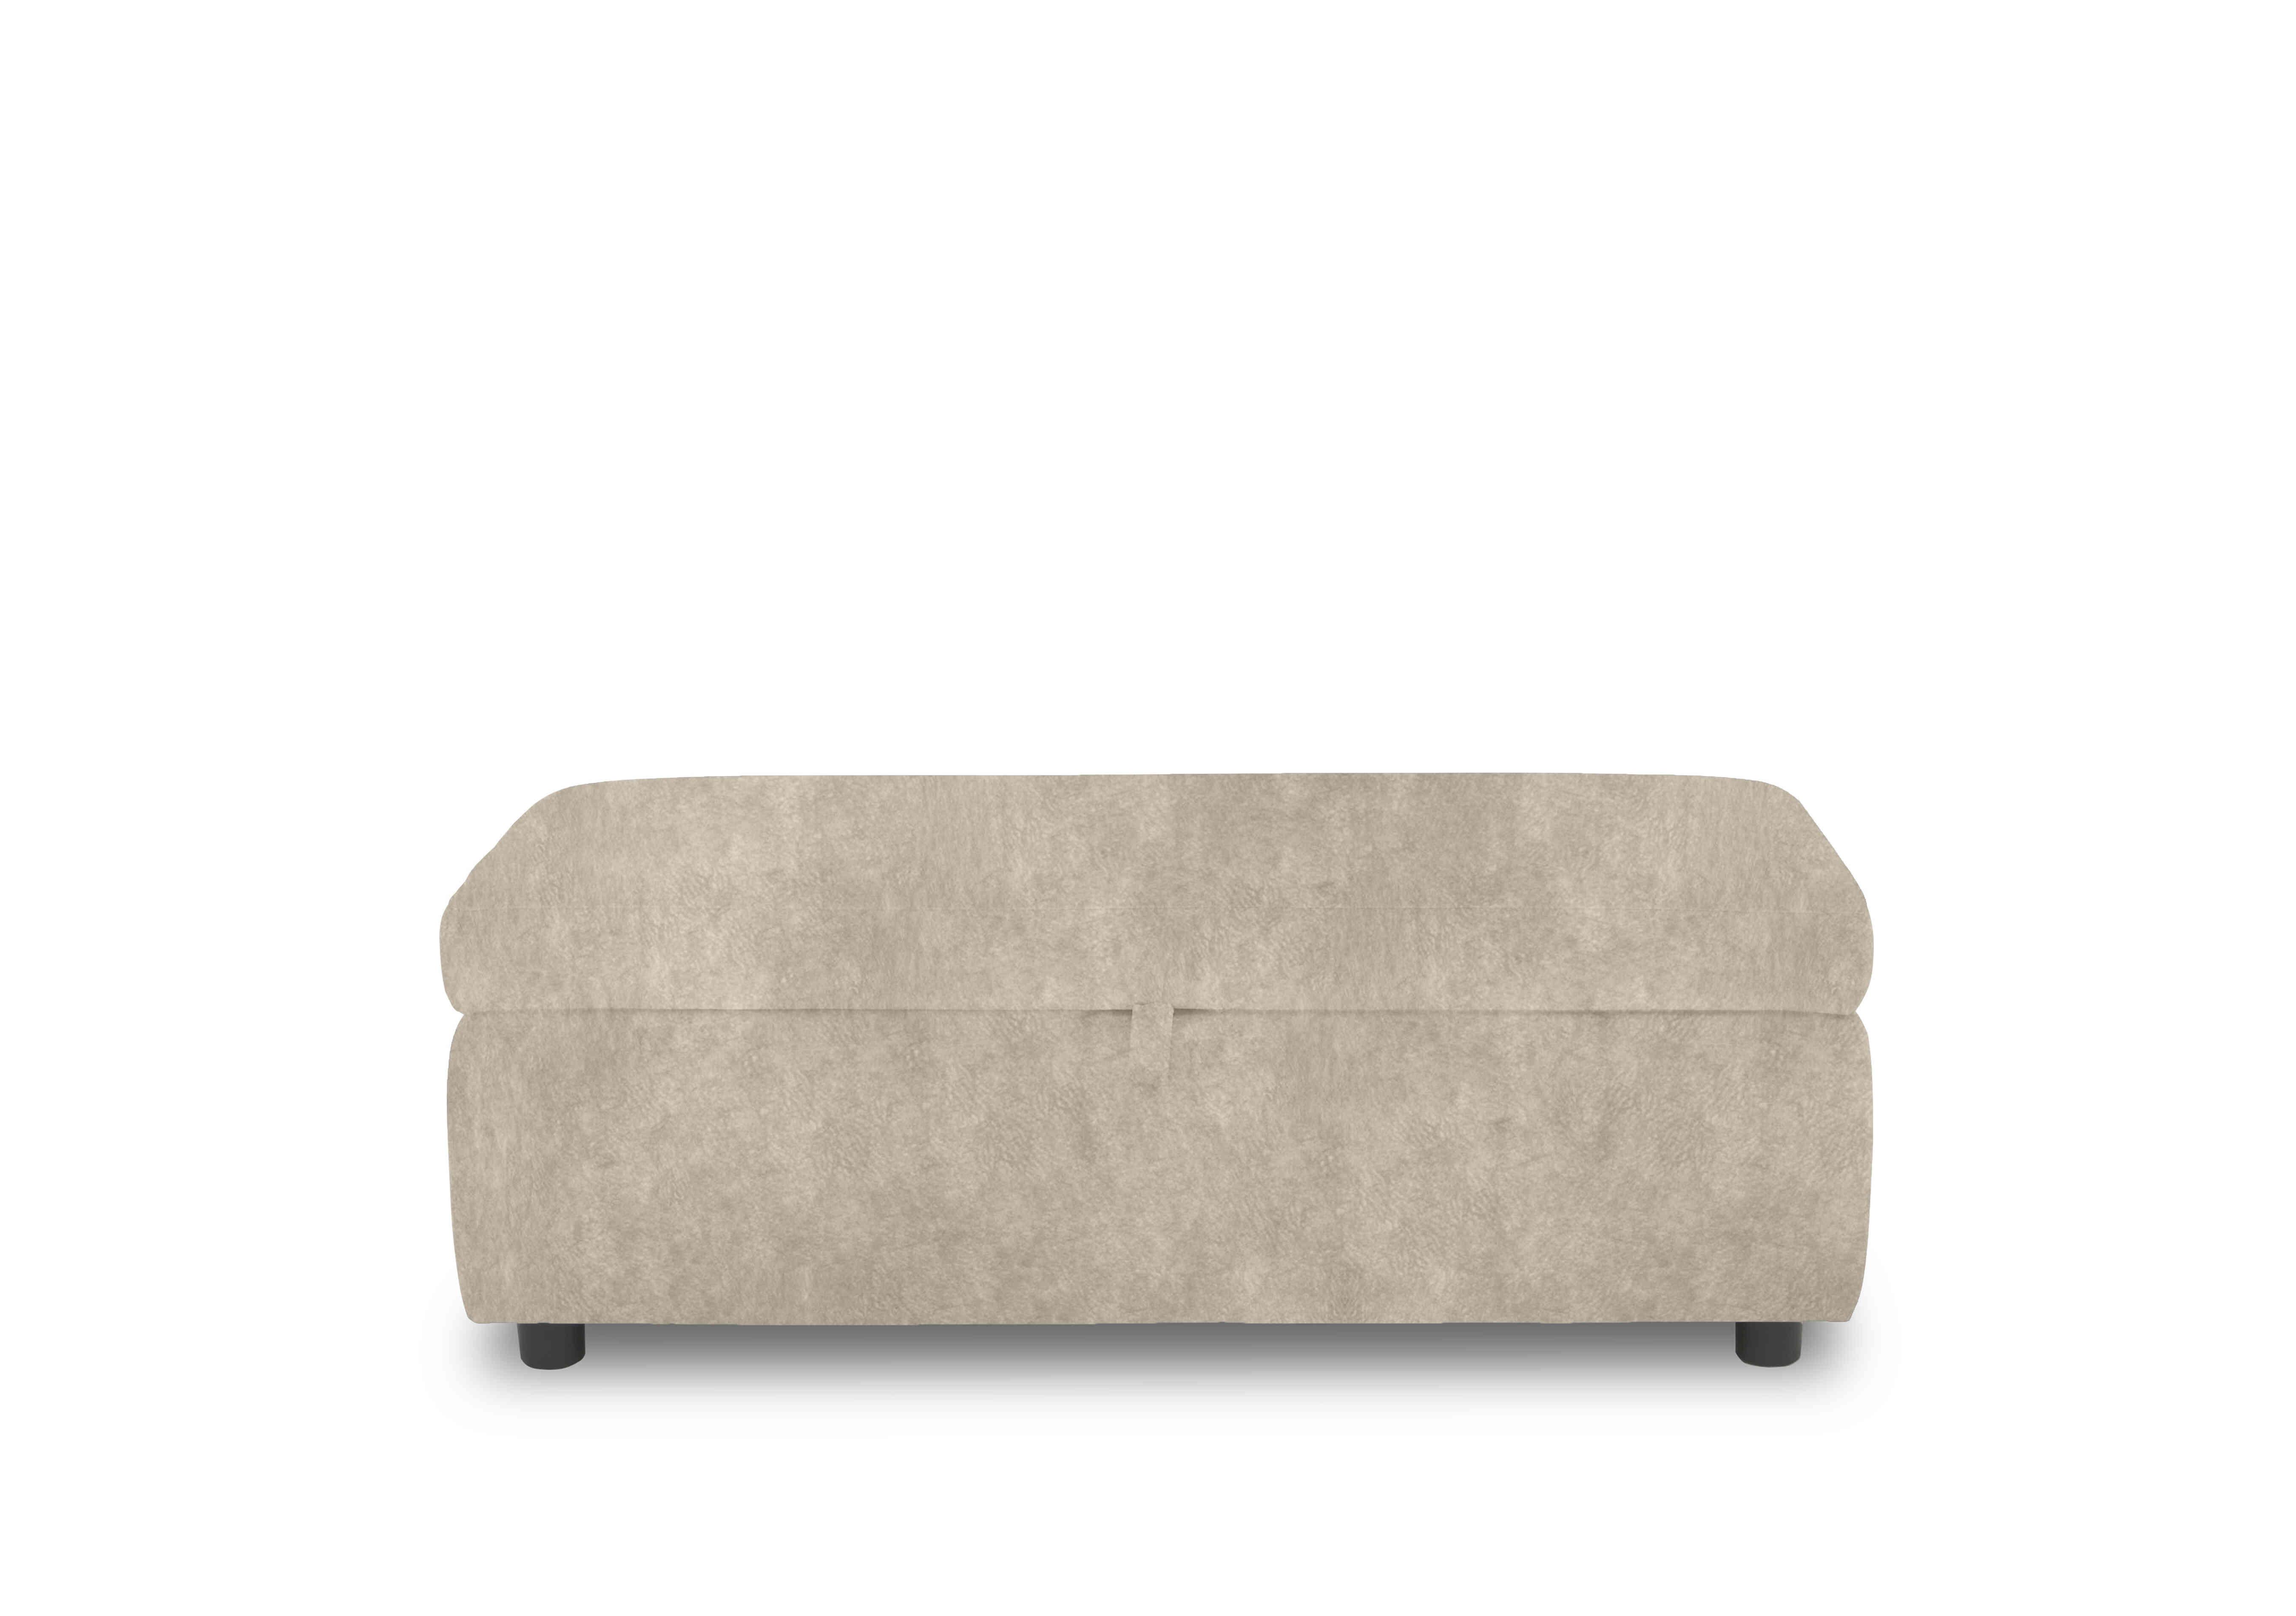 Stark 120cm Fabric Blanket Box in Bfa-Bnn-R26 Cream on Furniture Village